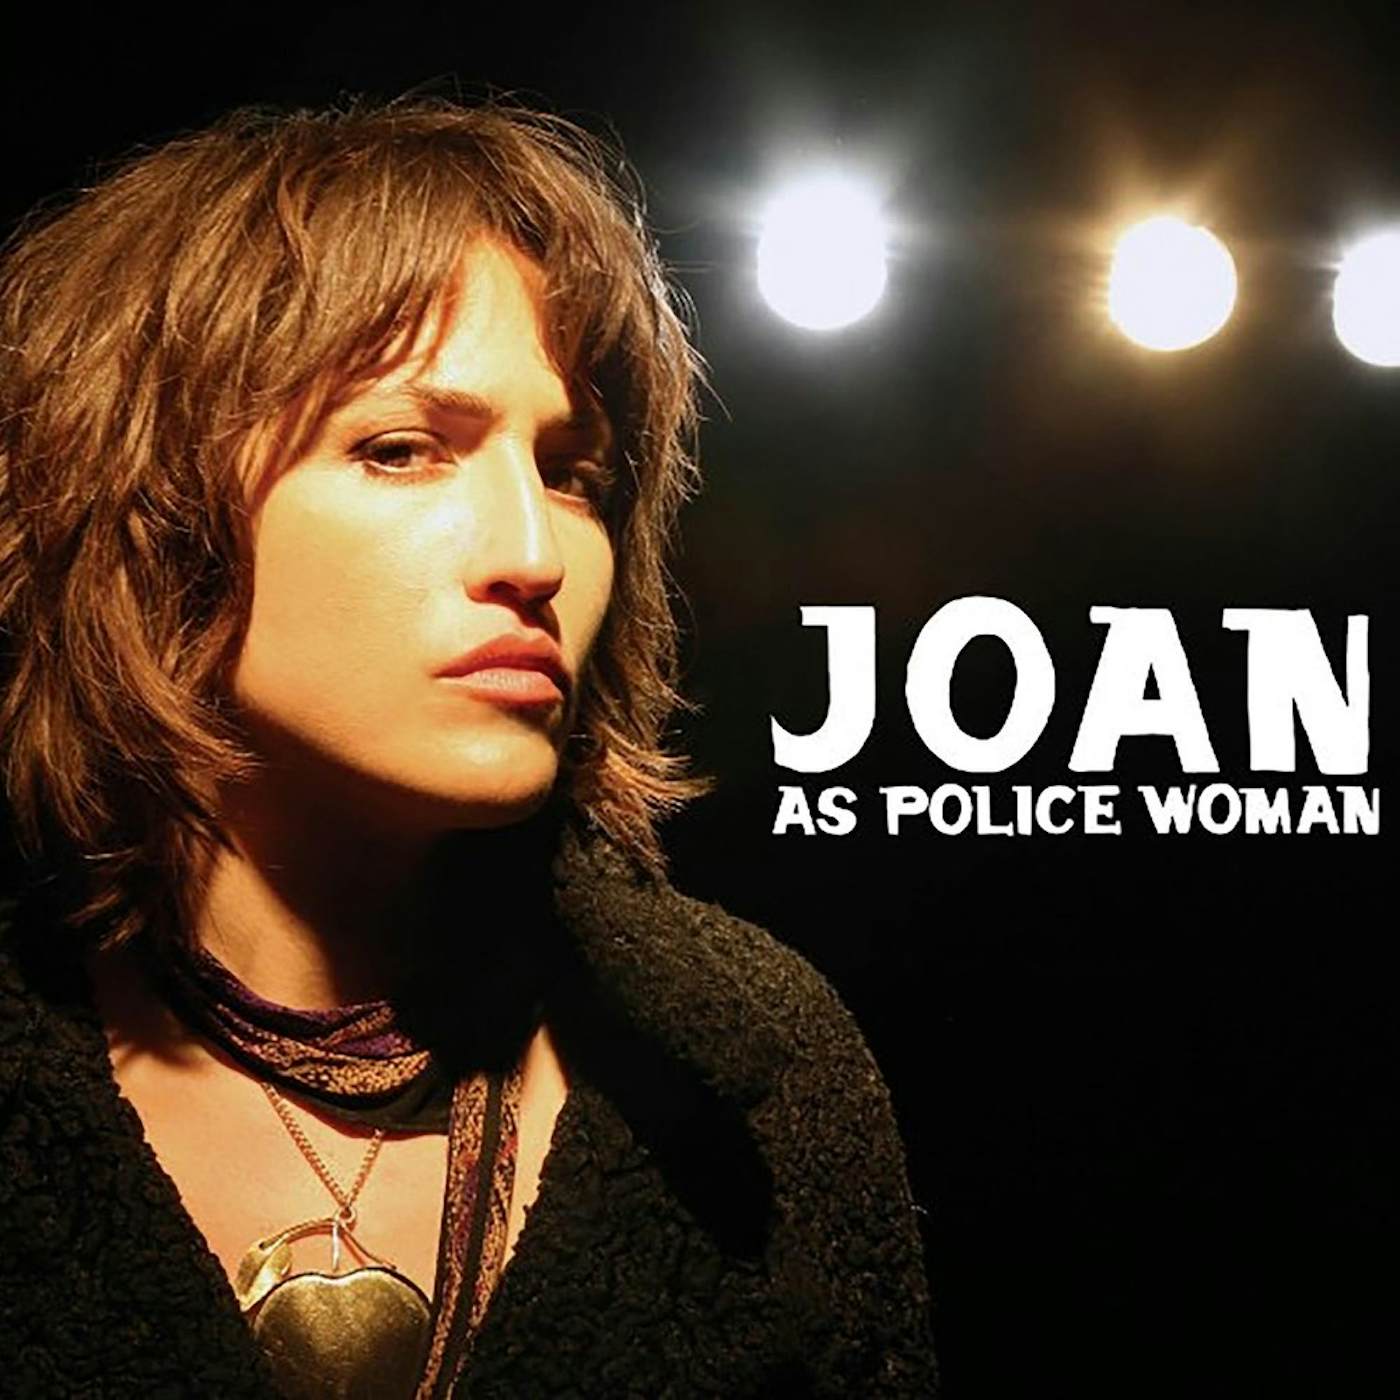 Joan As Police Woman & Benjamin Lazar Davis Real Life Vinyl Record